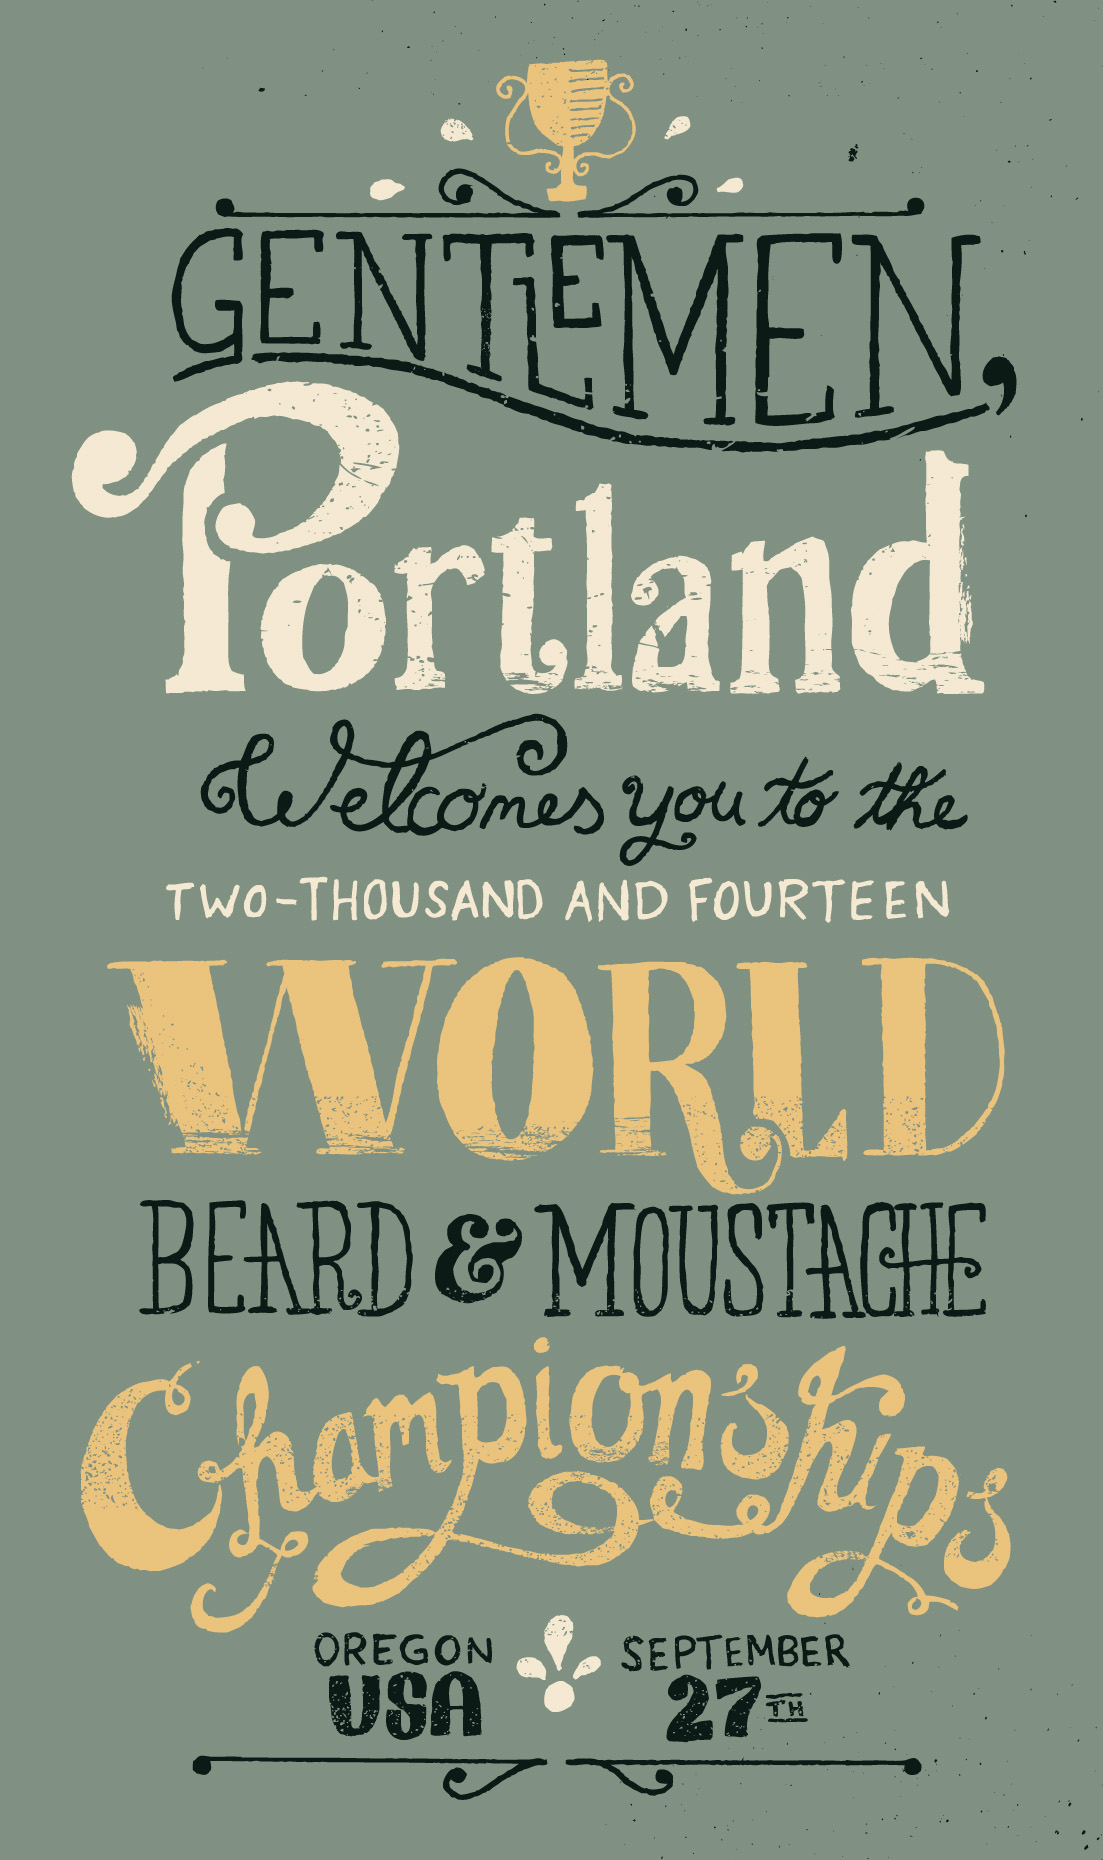 beard mustache poster moustache Portland championships Hand Lettered vintage fancy gentleman world